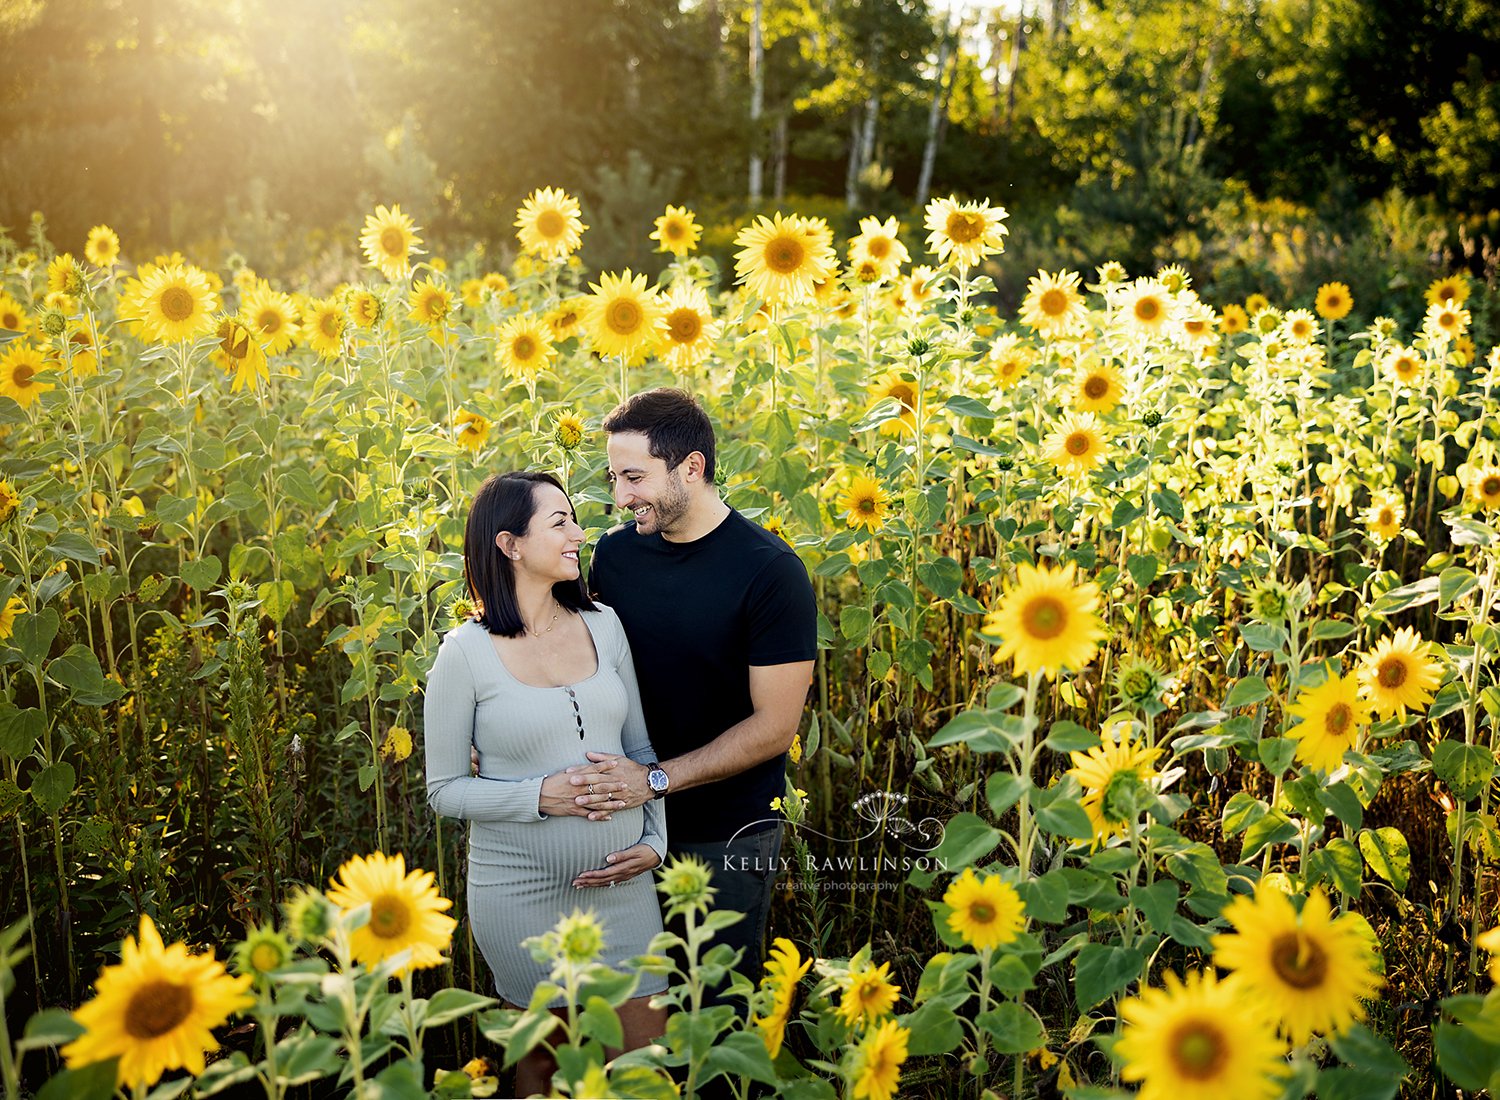 Maternity-photos-sunflowers.jpg